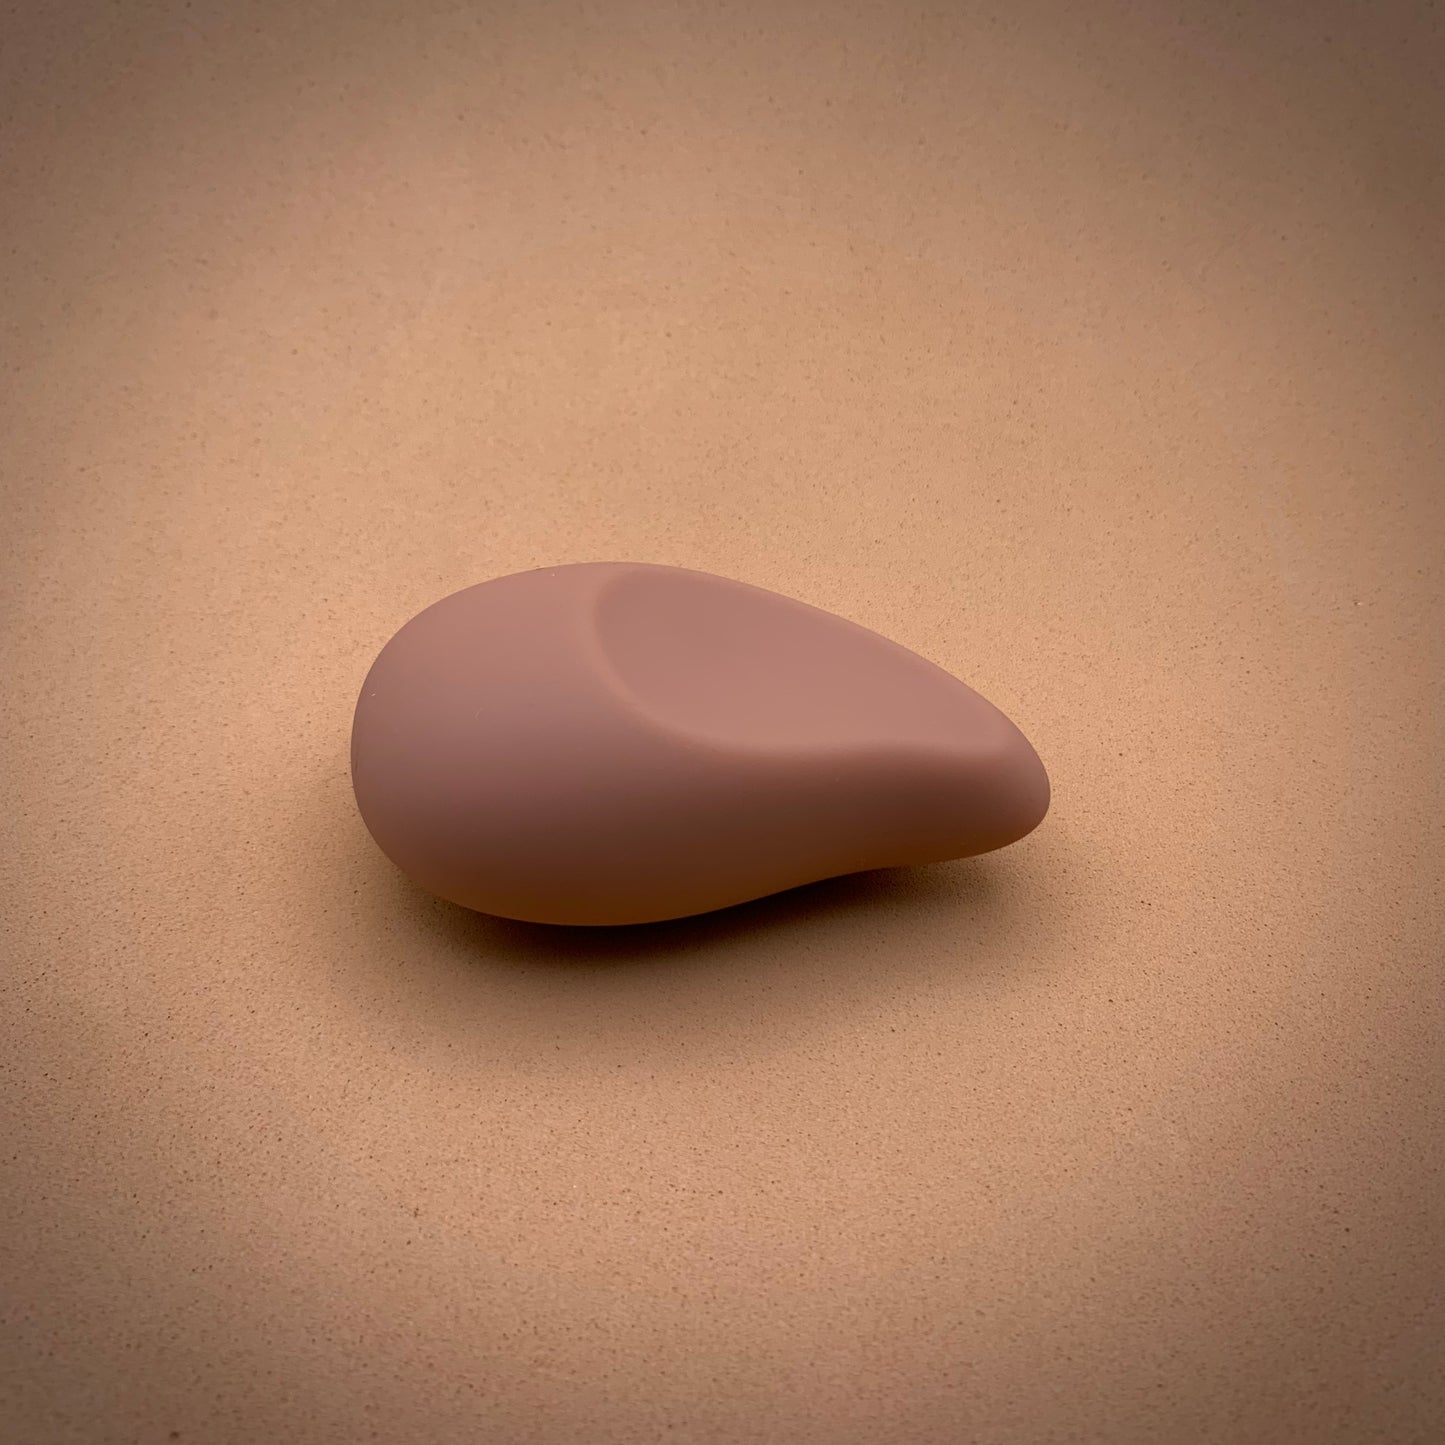 a pebble shaped, nude coloured vibrator